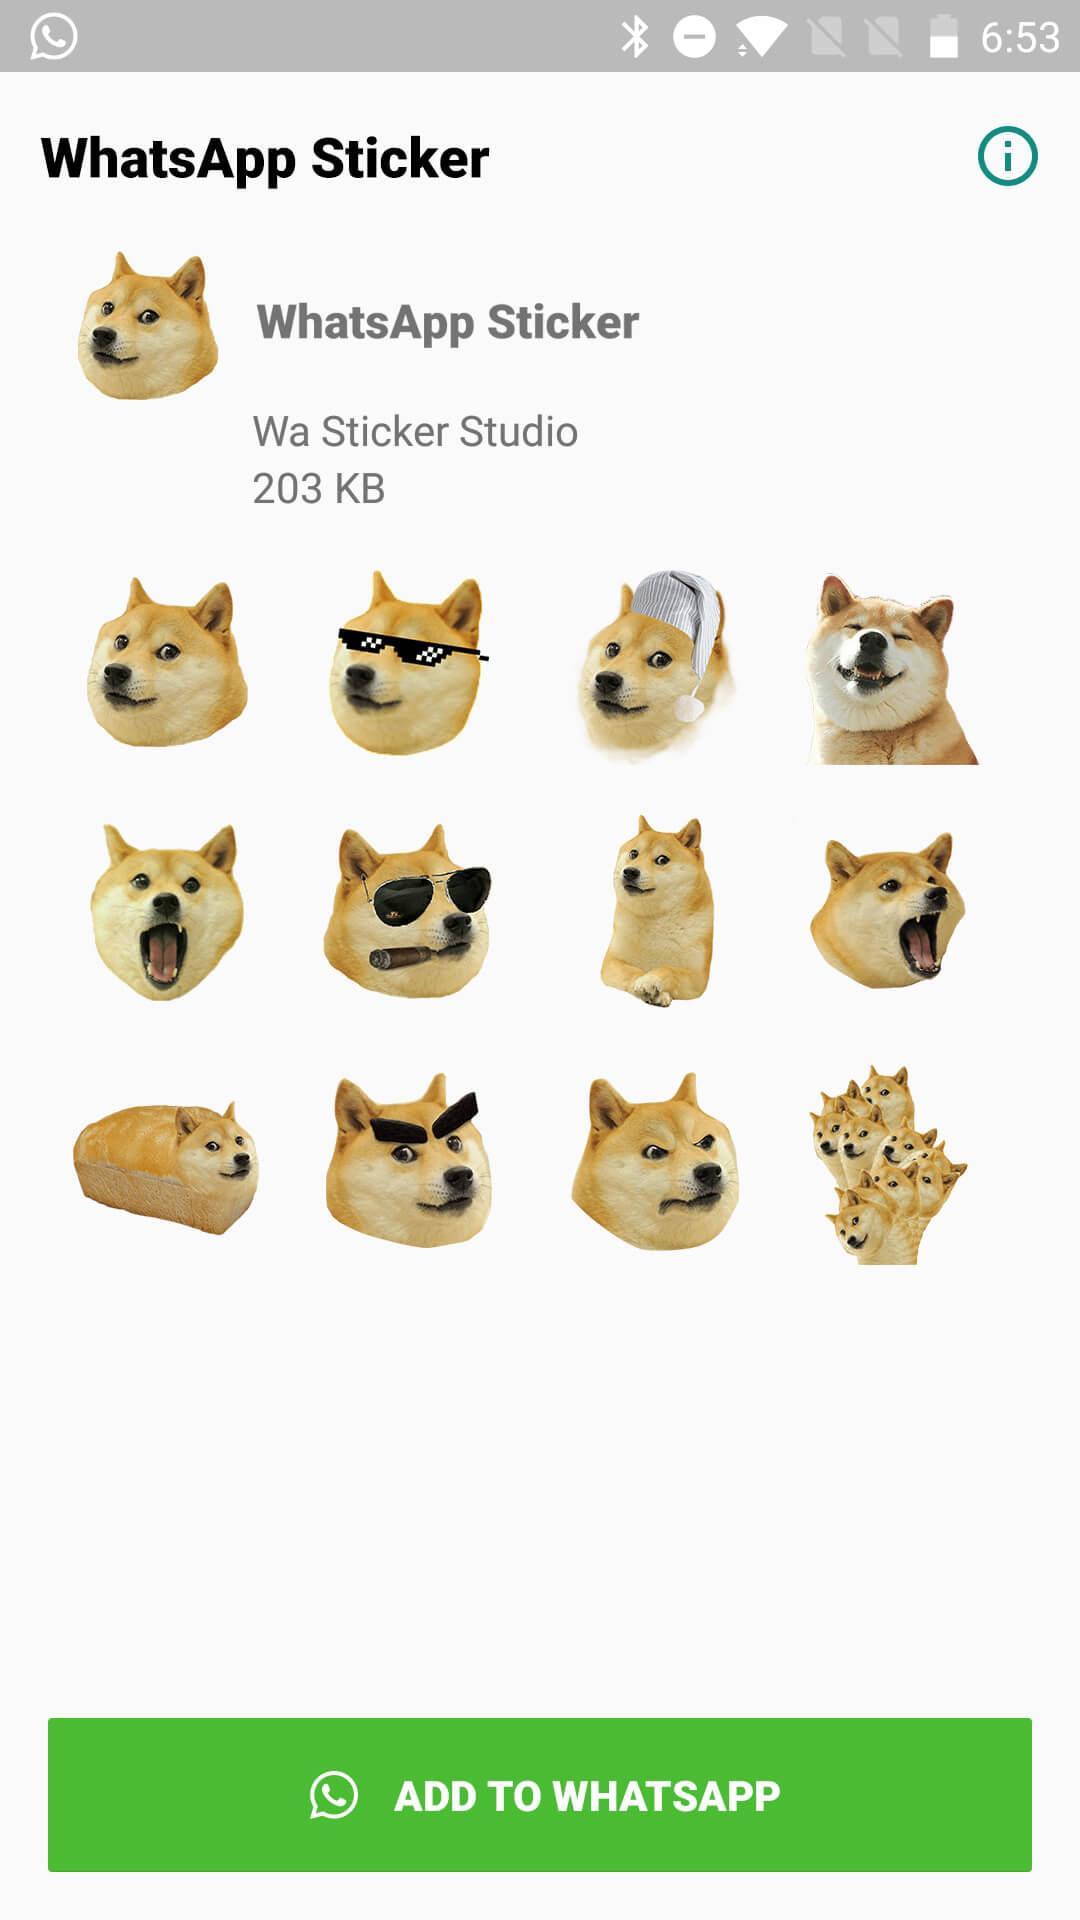 Doge Meme Stickers For Whatsapp